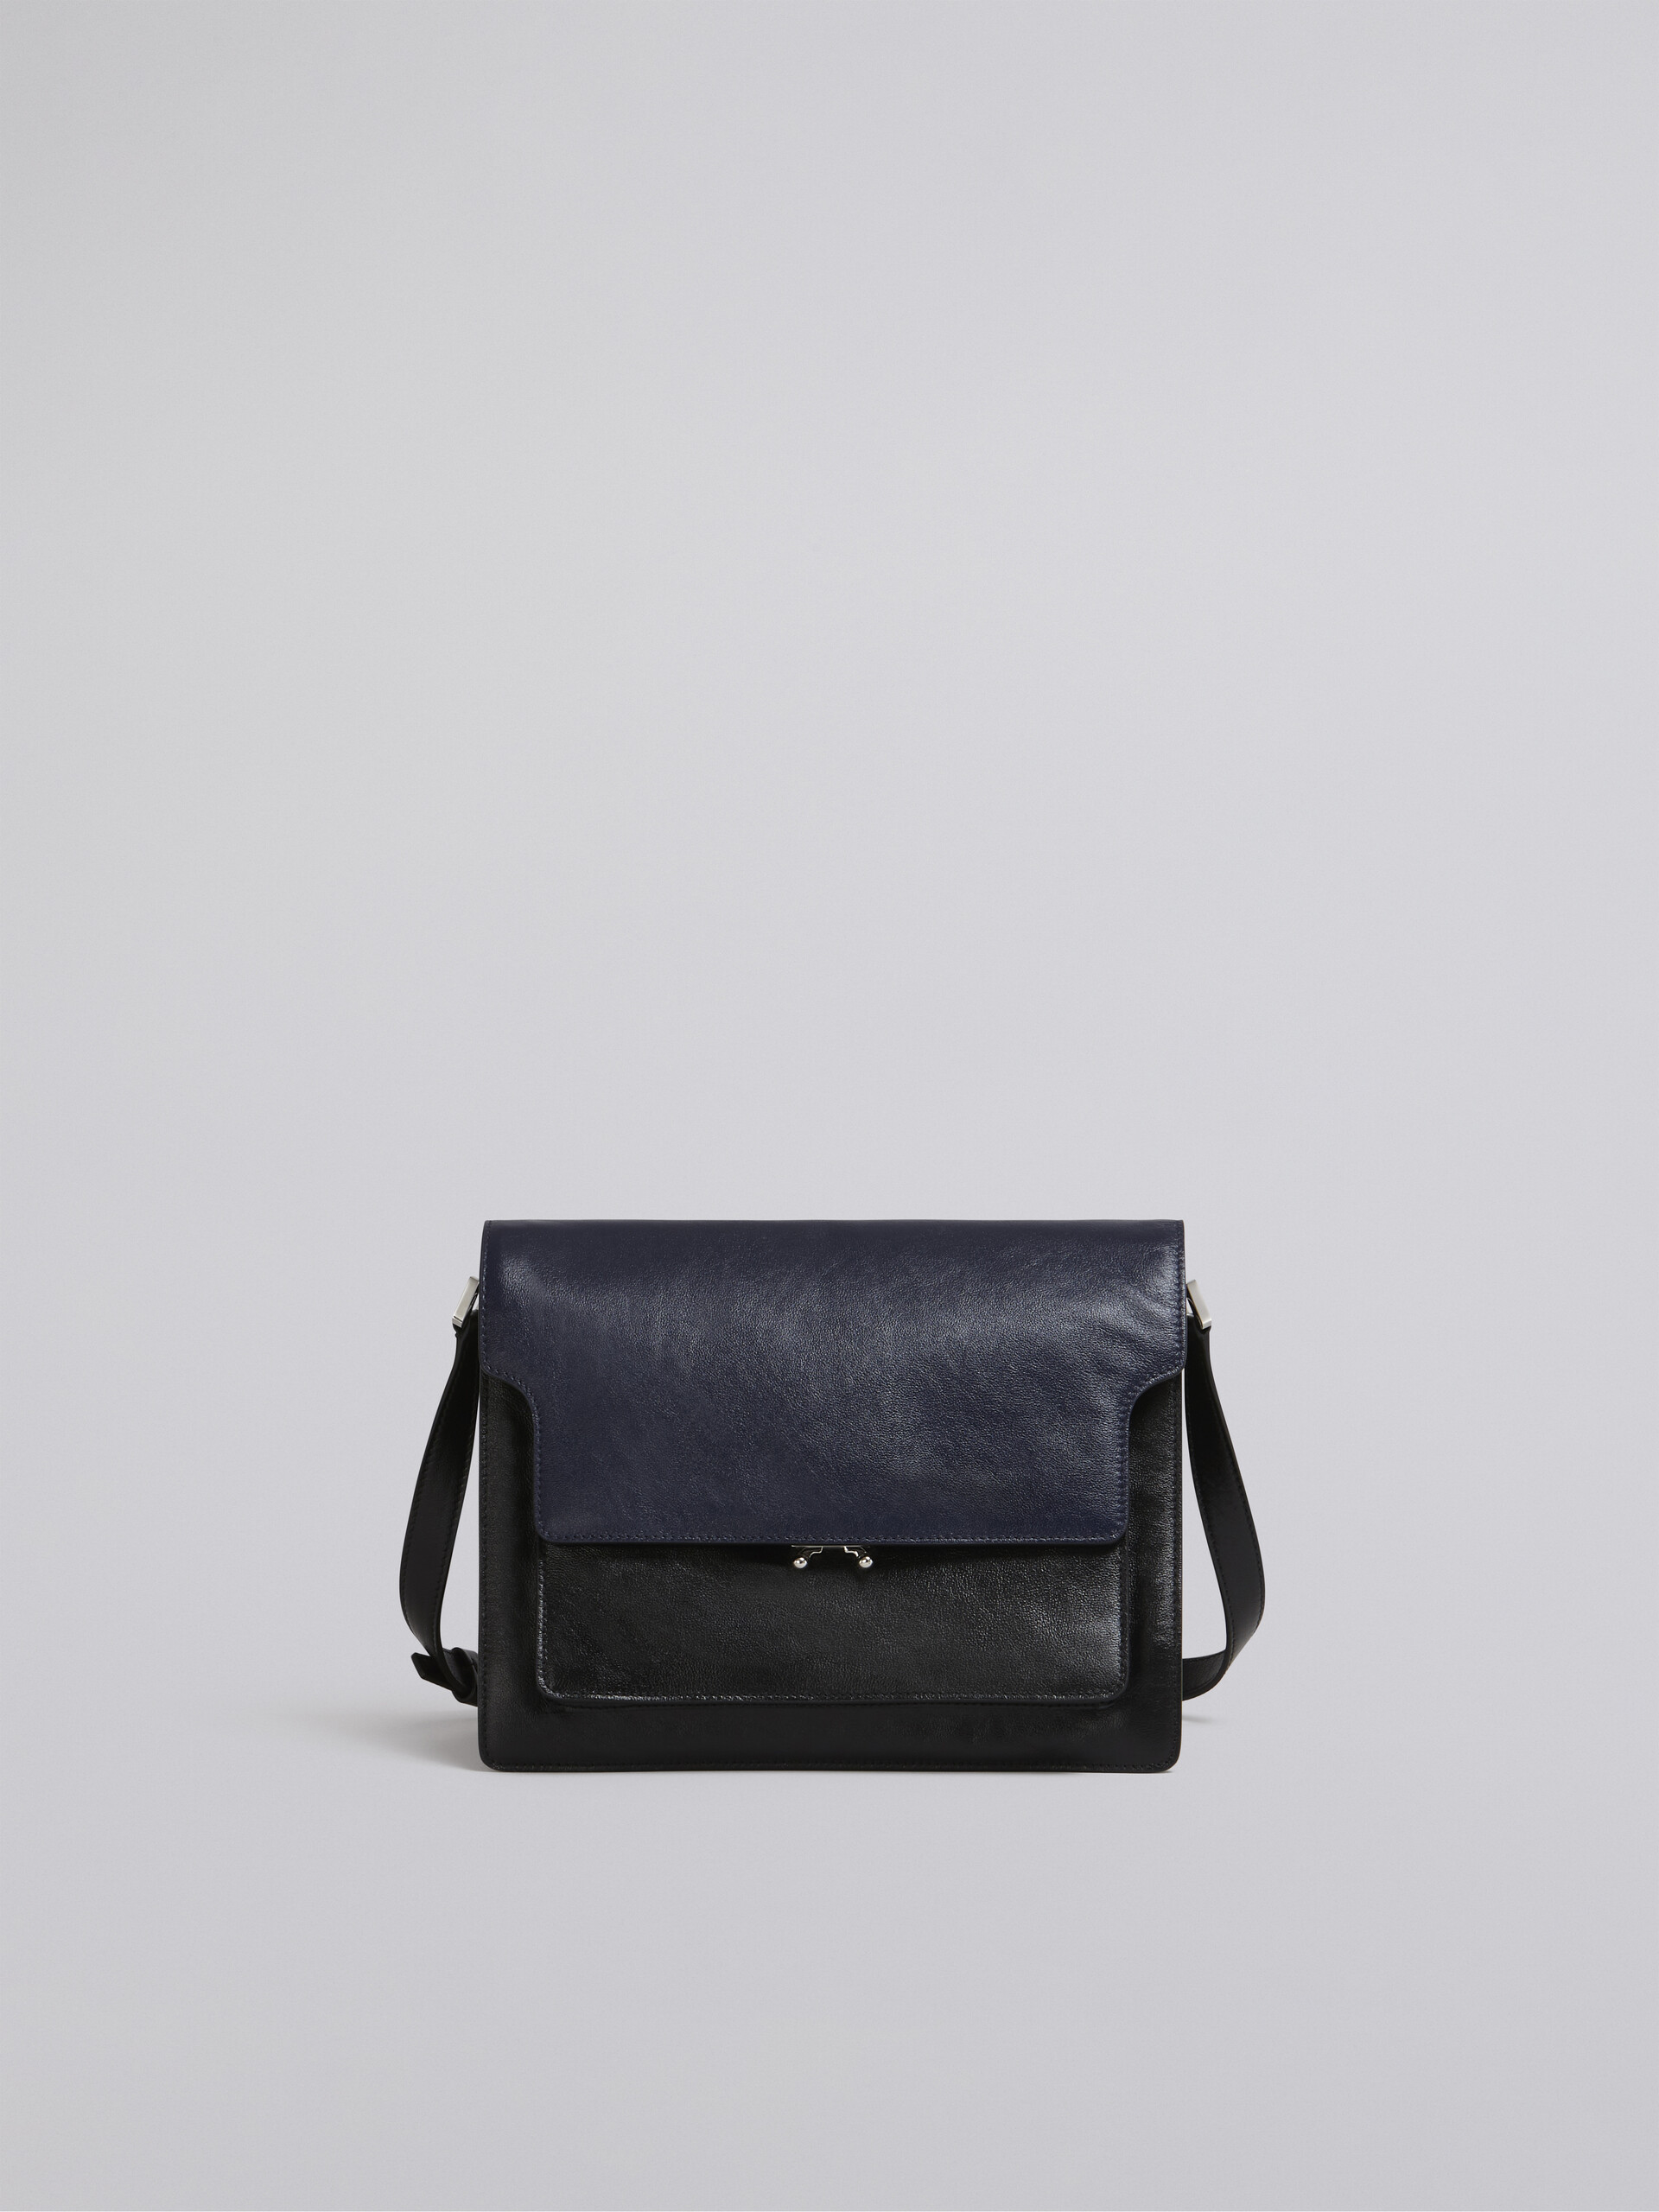 TRUNK SOFT large bag in blue and black leather - Shoulder Bags - Image 1